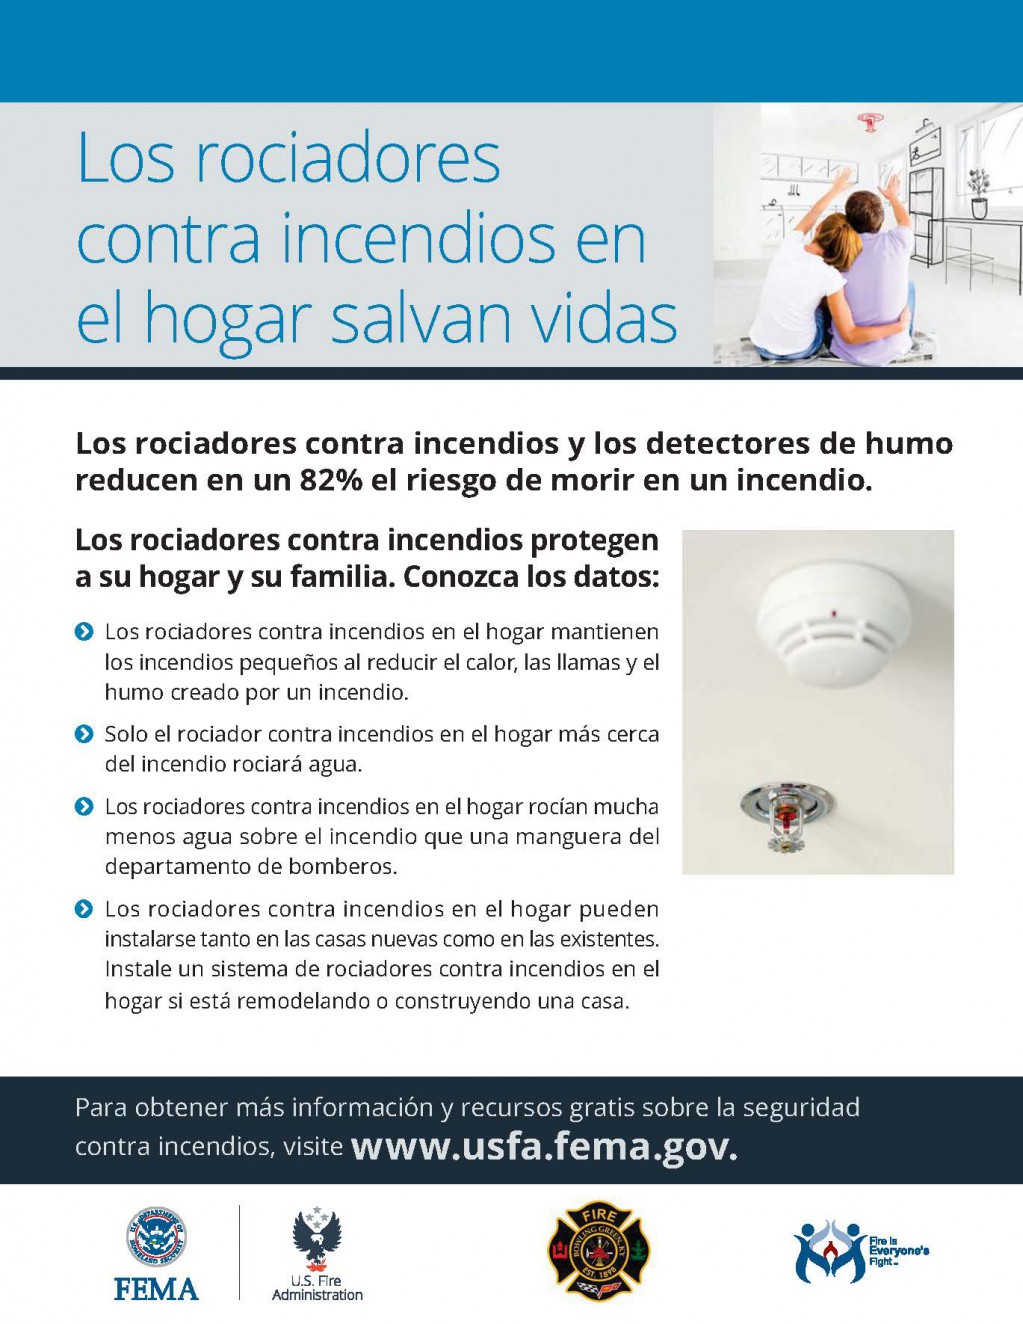 Home Fire Sprinklers Save Lives Spanish